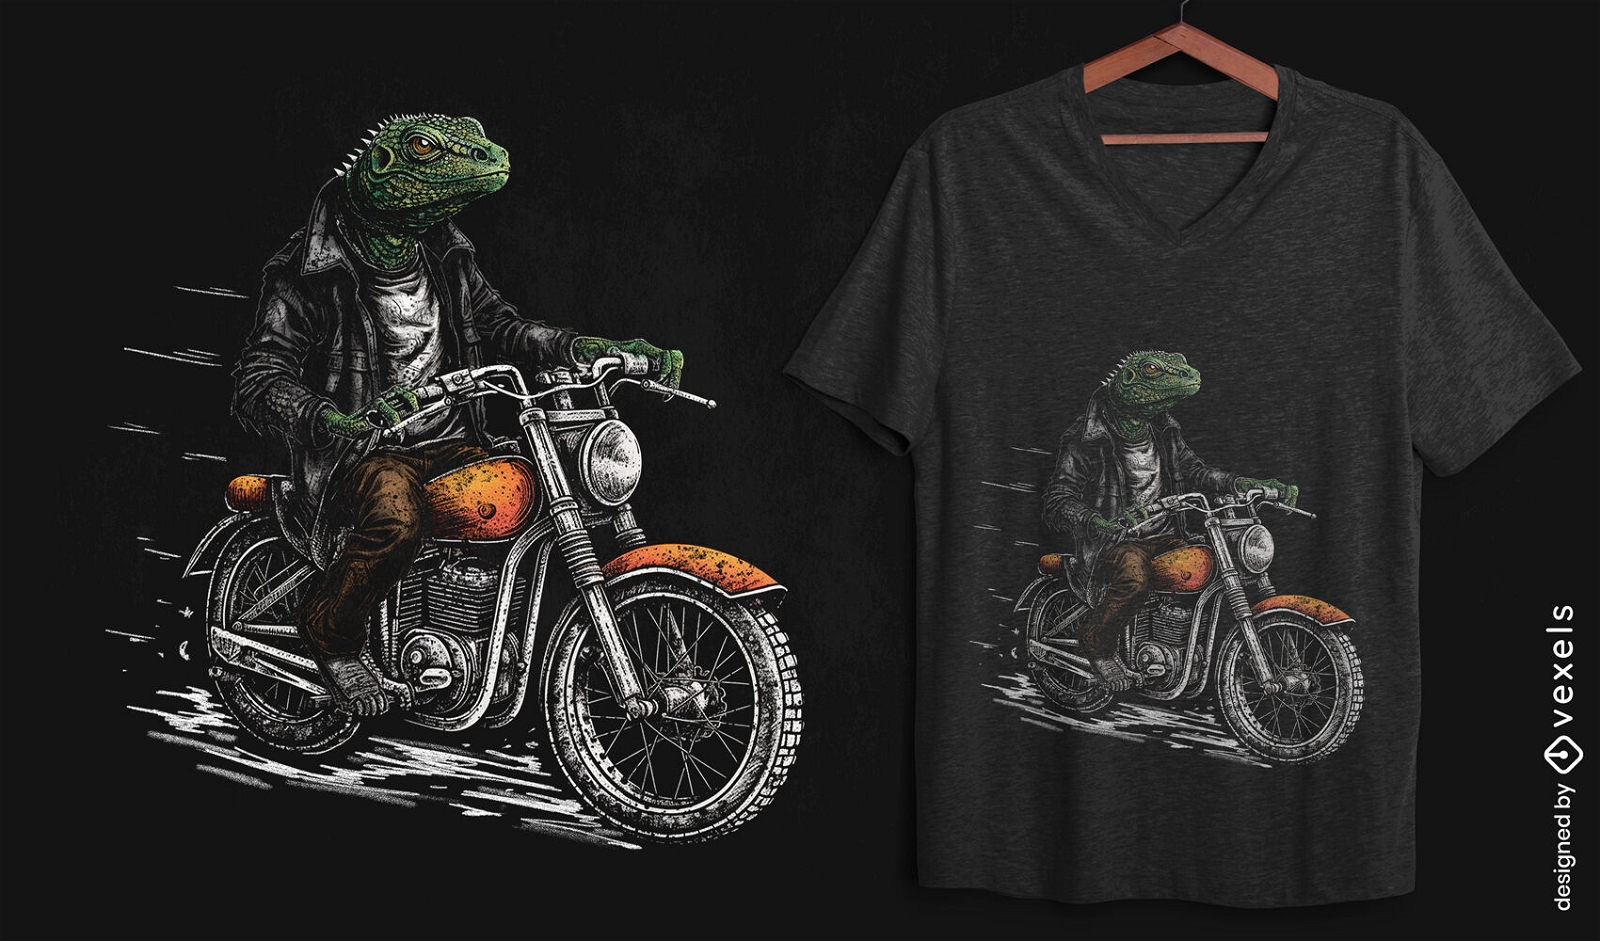 Dise?o de camiseta de motociclista reptil.